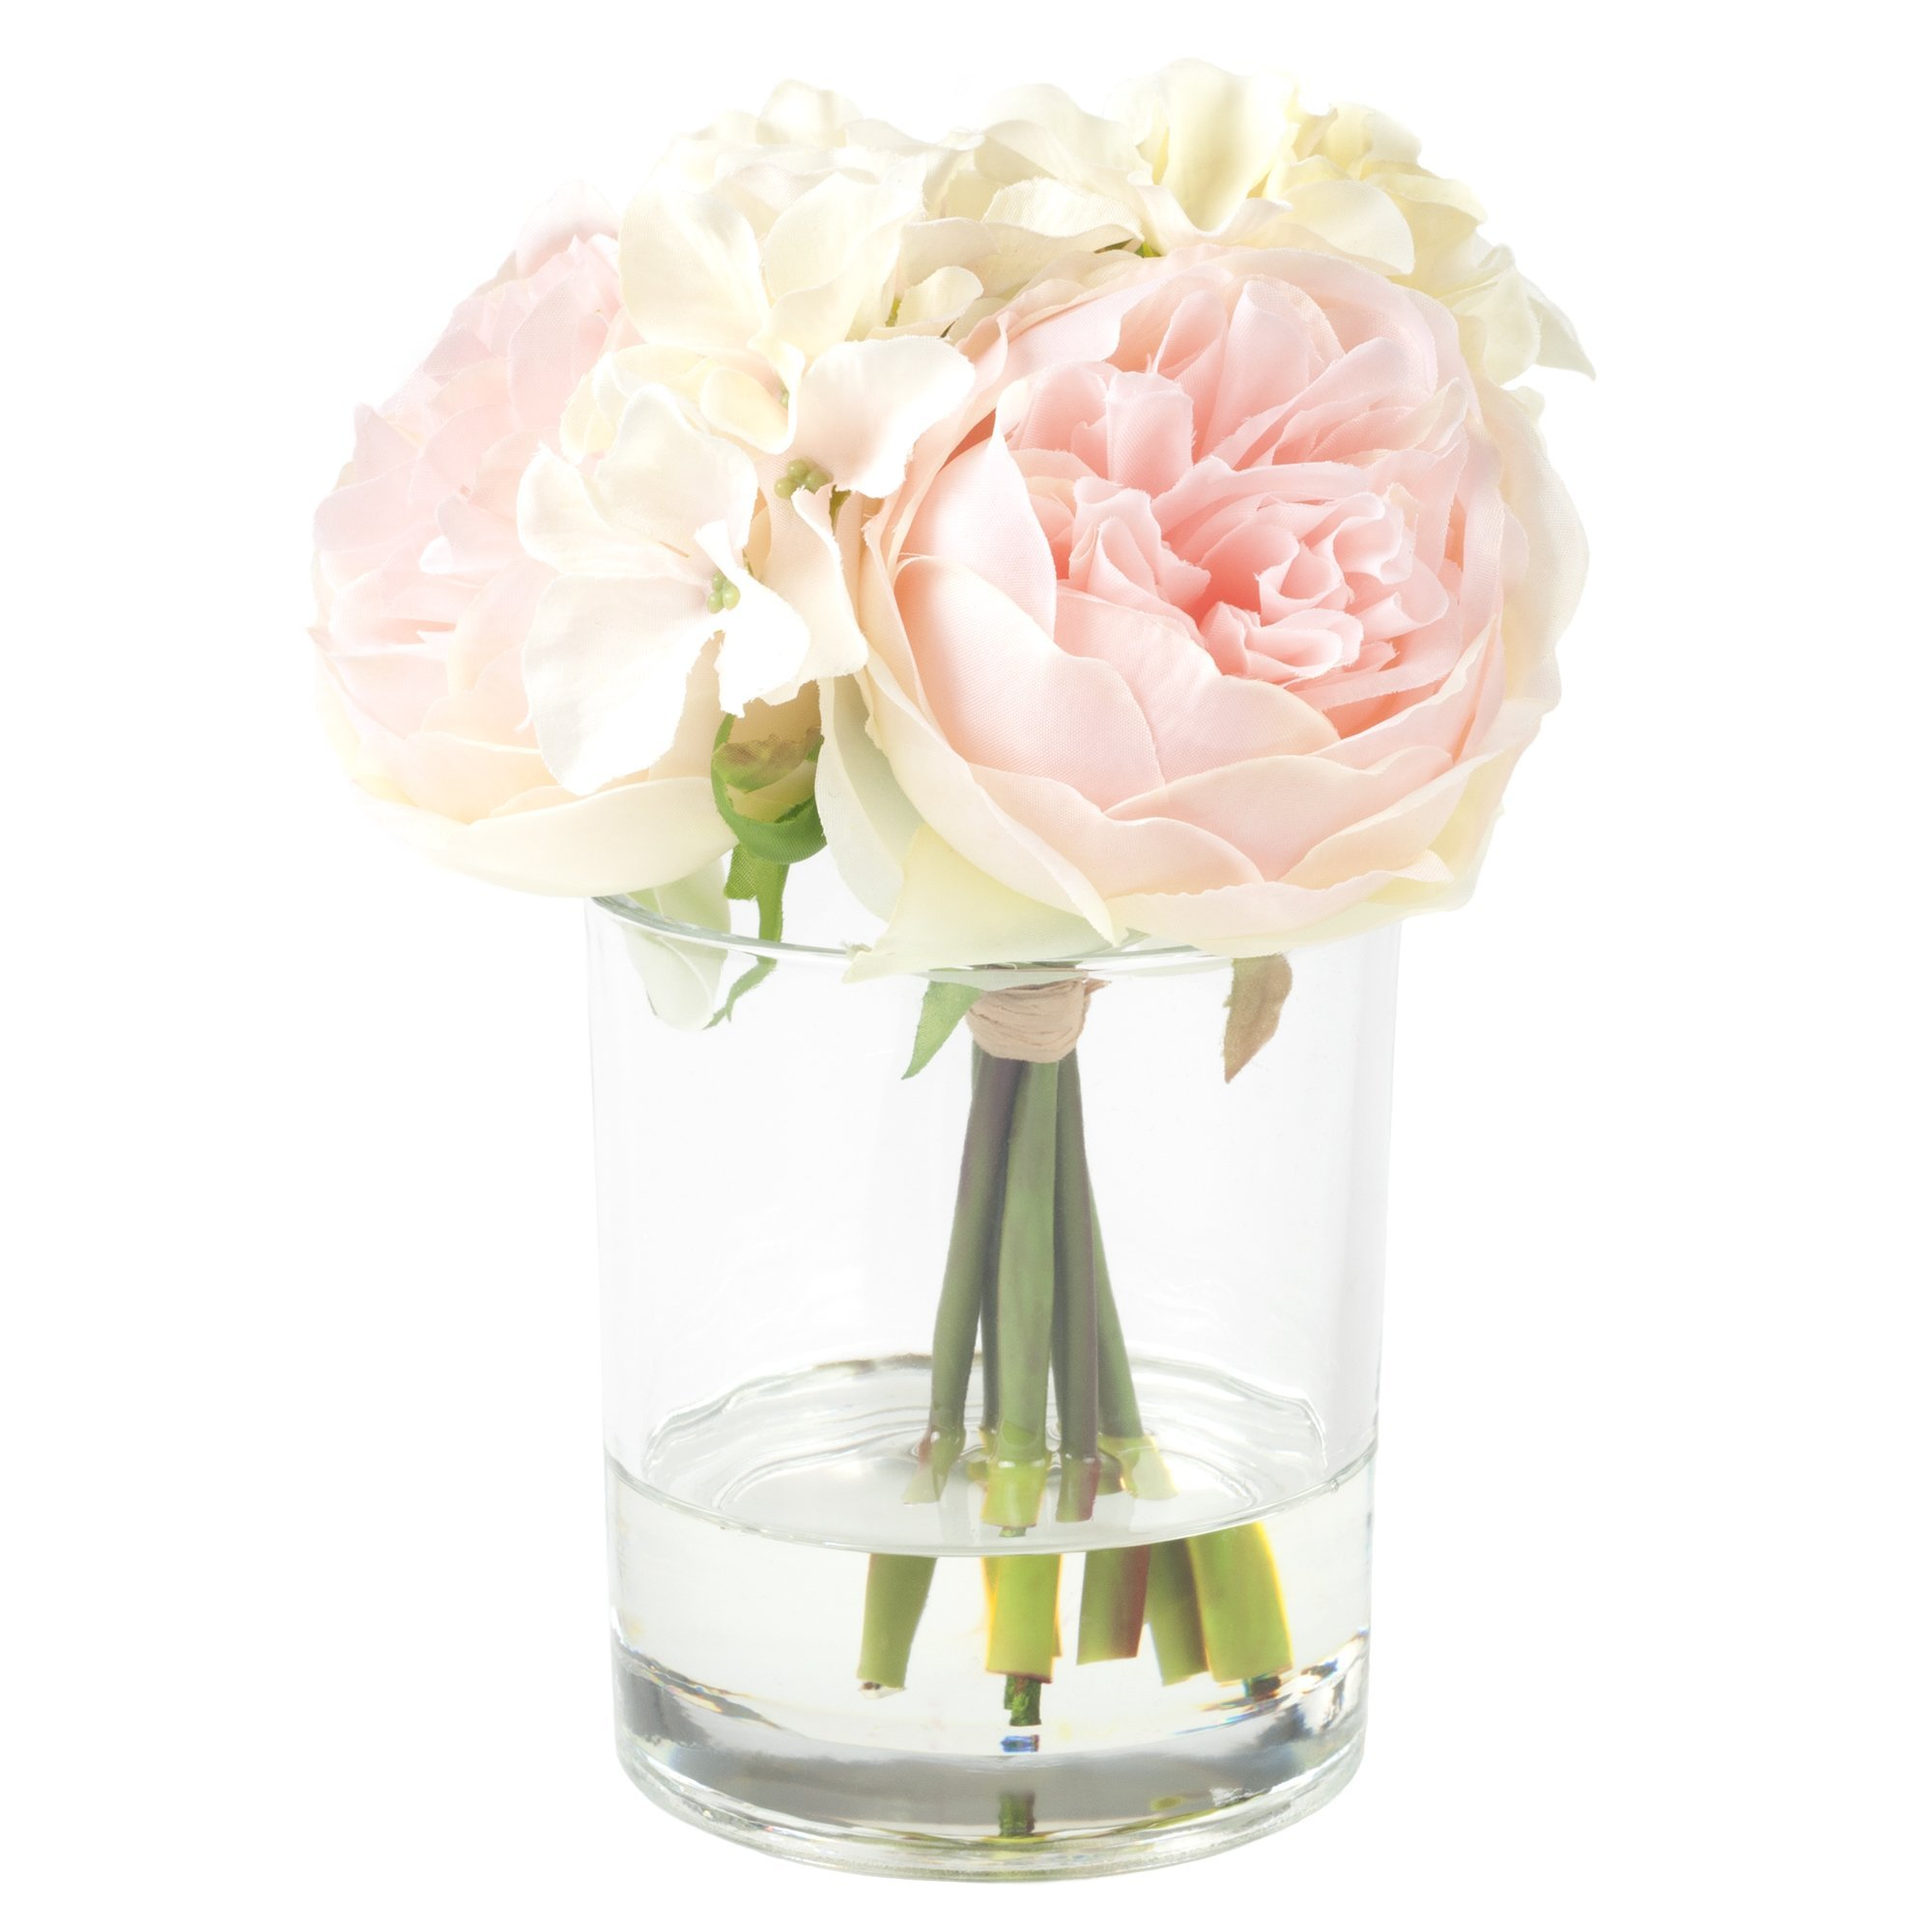 Hydrangea and Rose Arrangement in Glass Vase - Wayfair